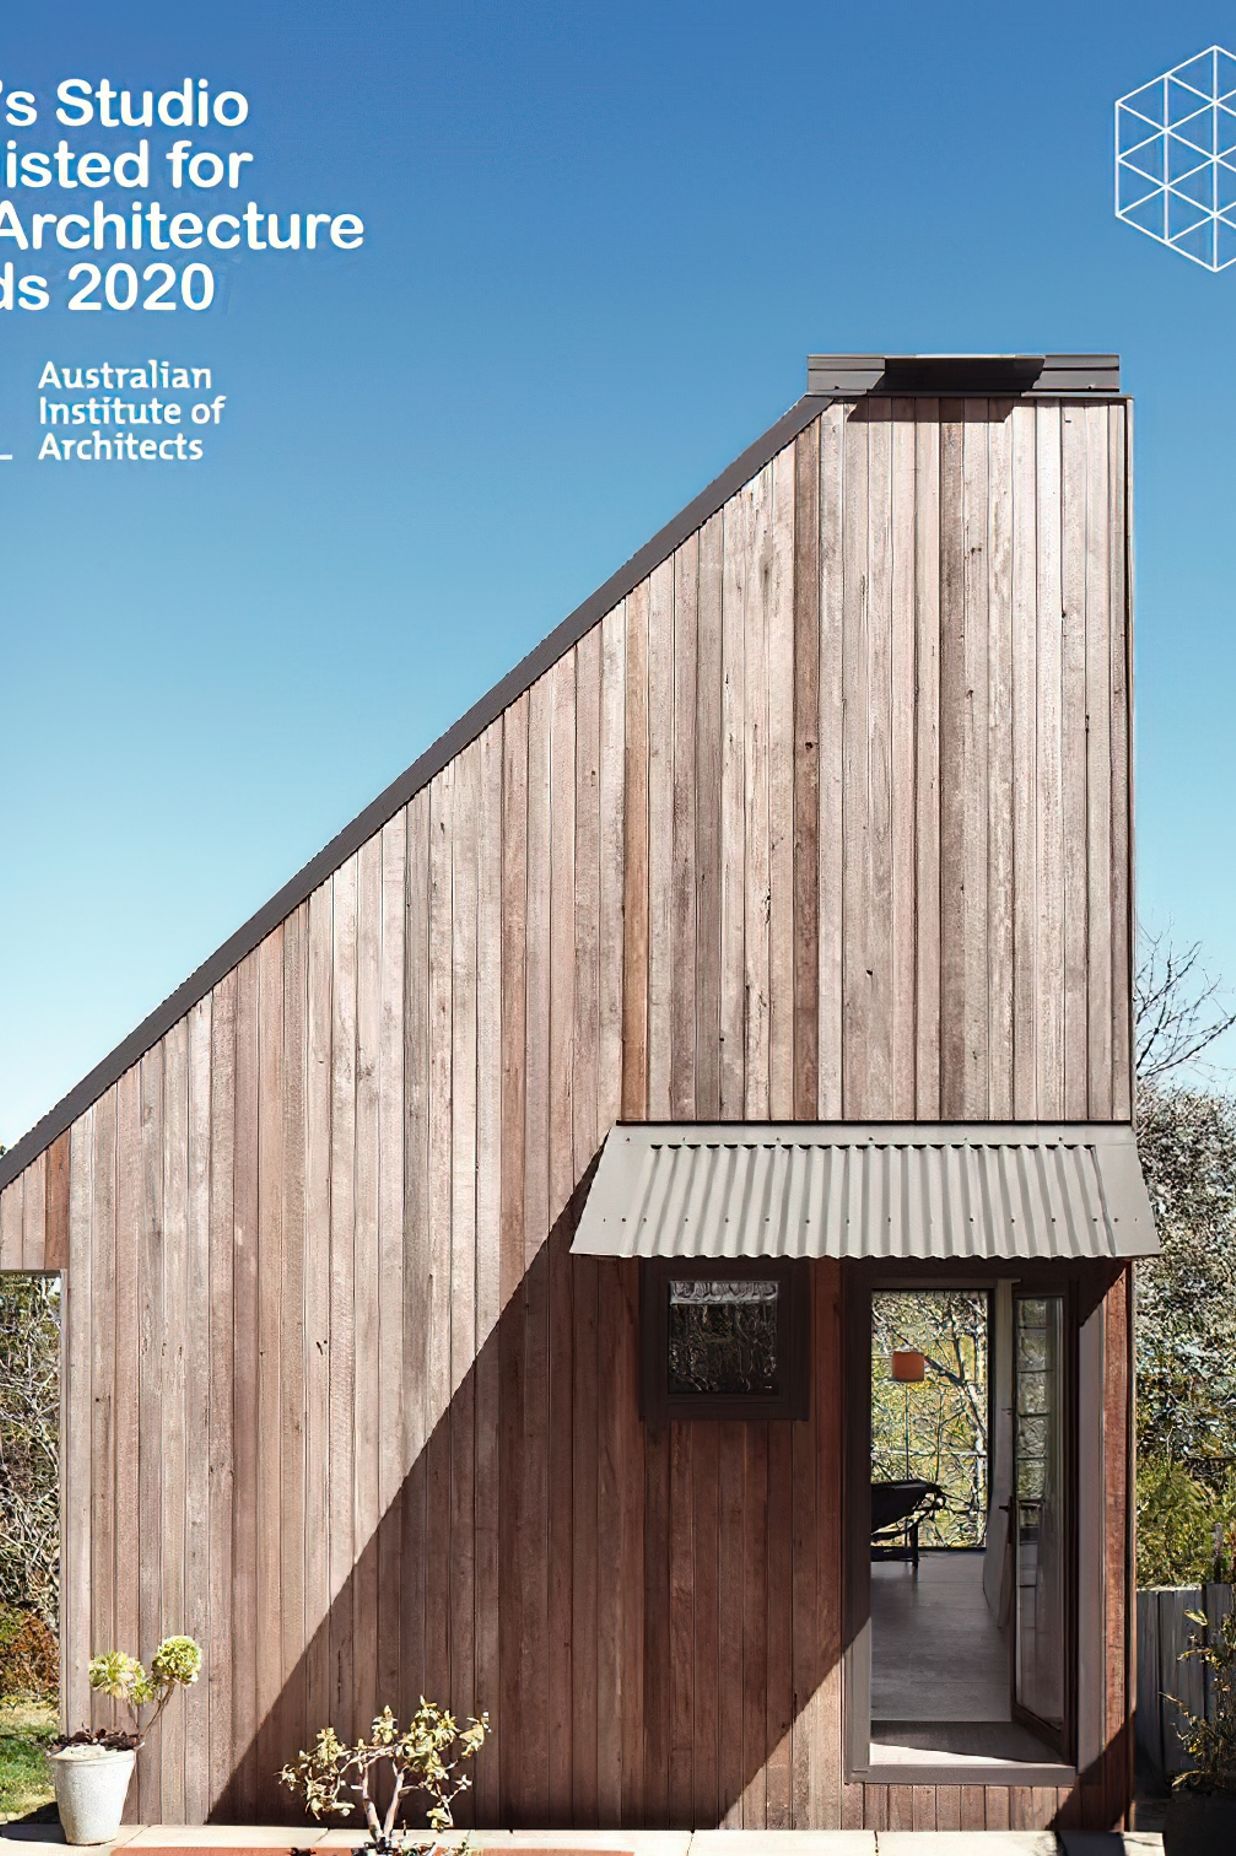 Blackheath Artist’s Studio Shortlisted for NSW Architecture Awards